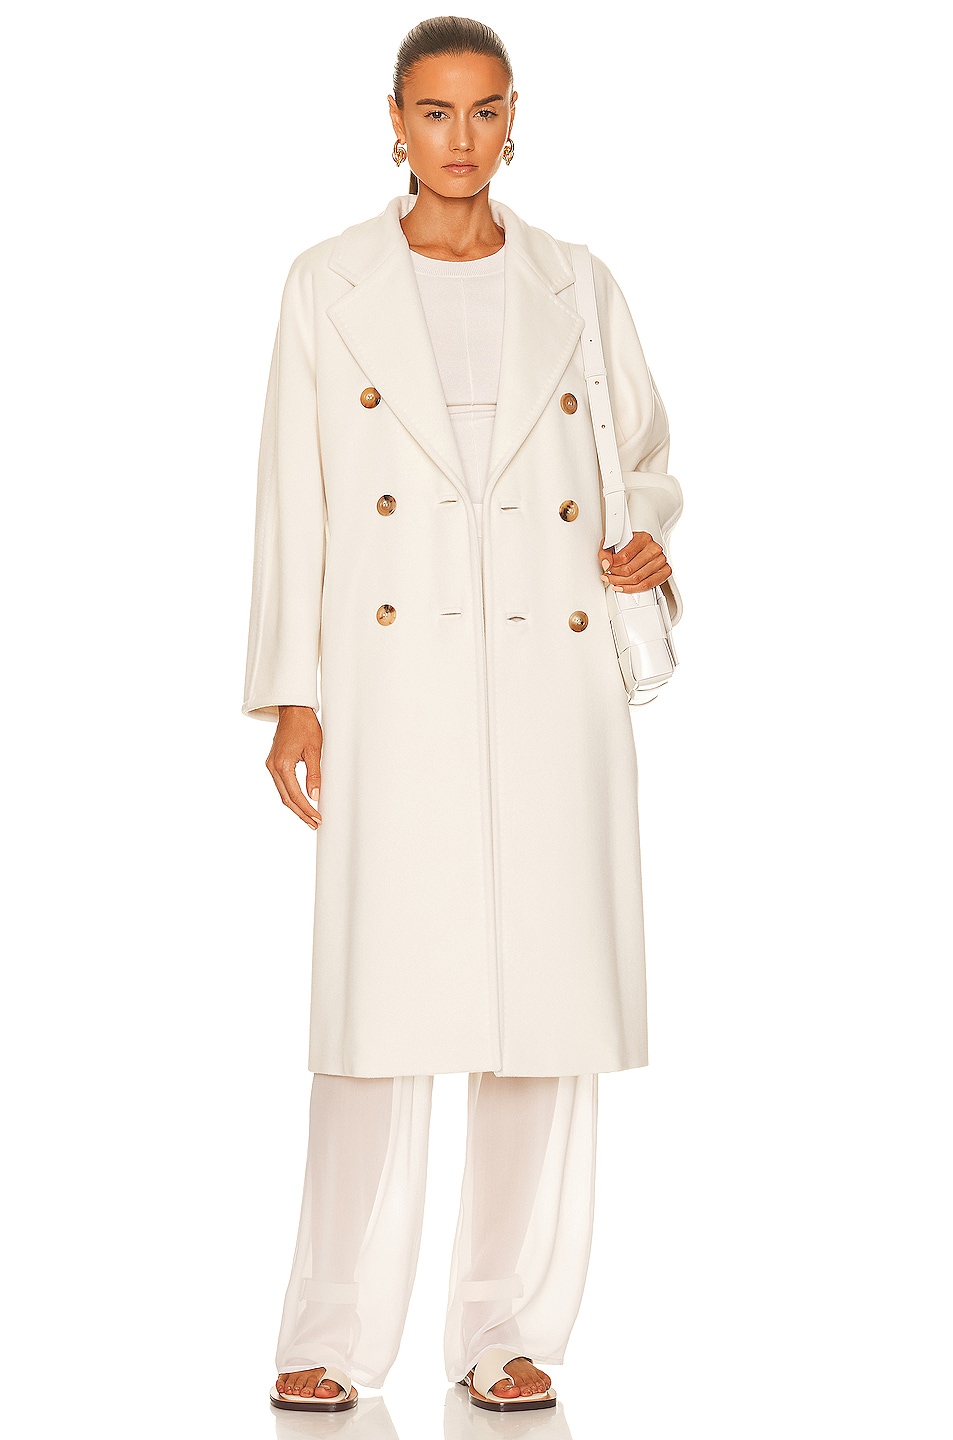 Max Mara Madame Coat in Optical White | FWRD